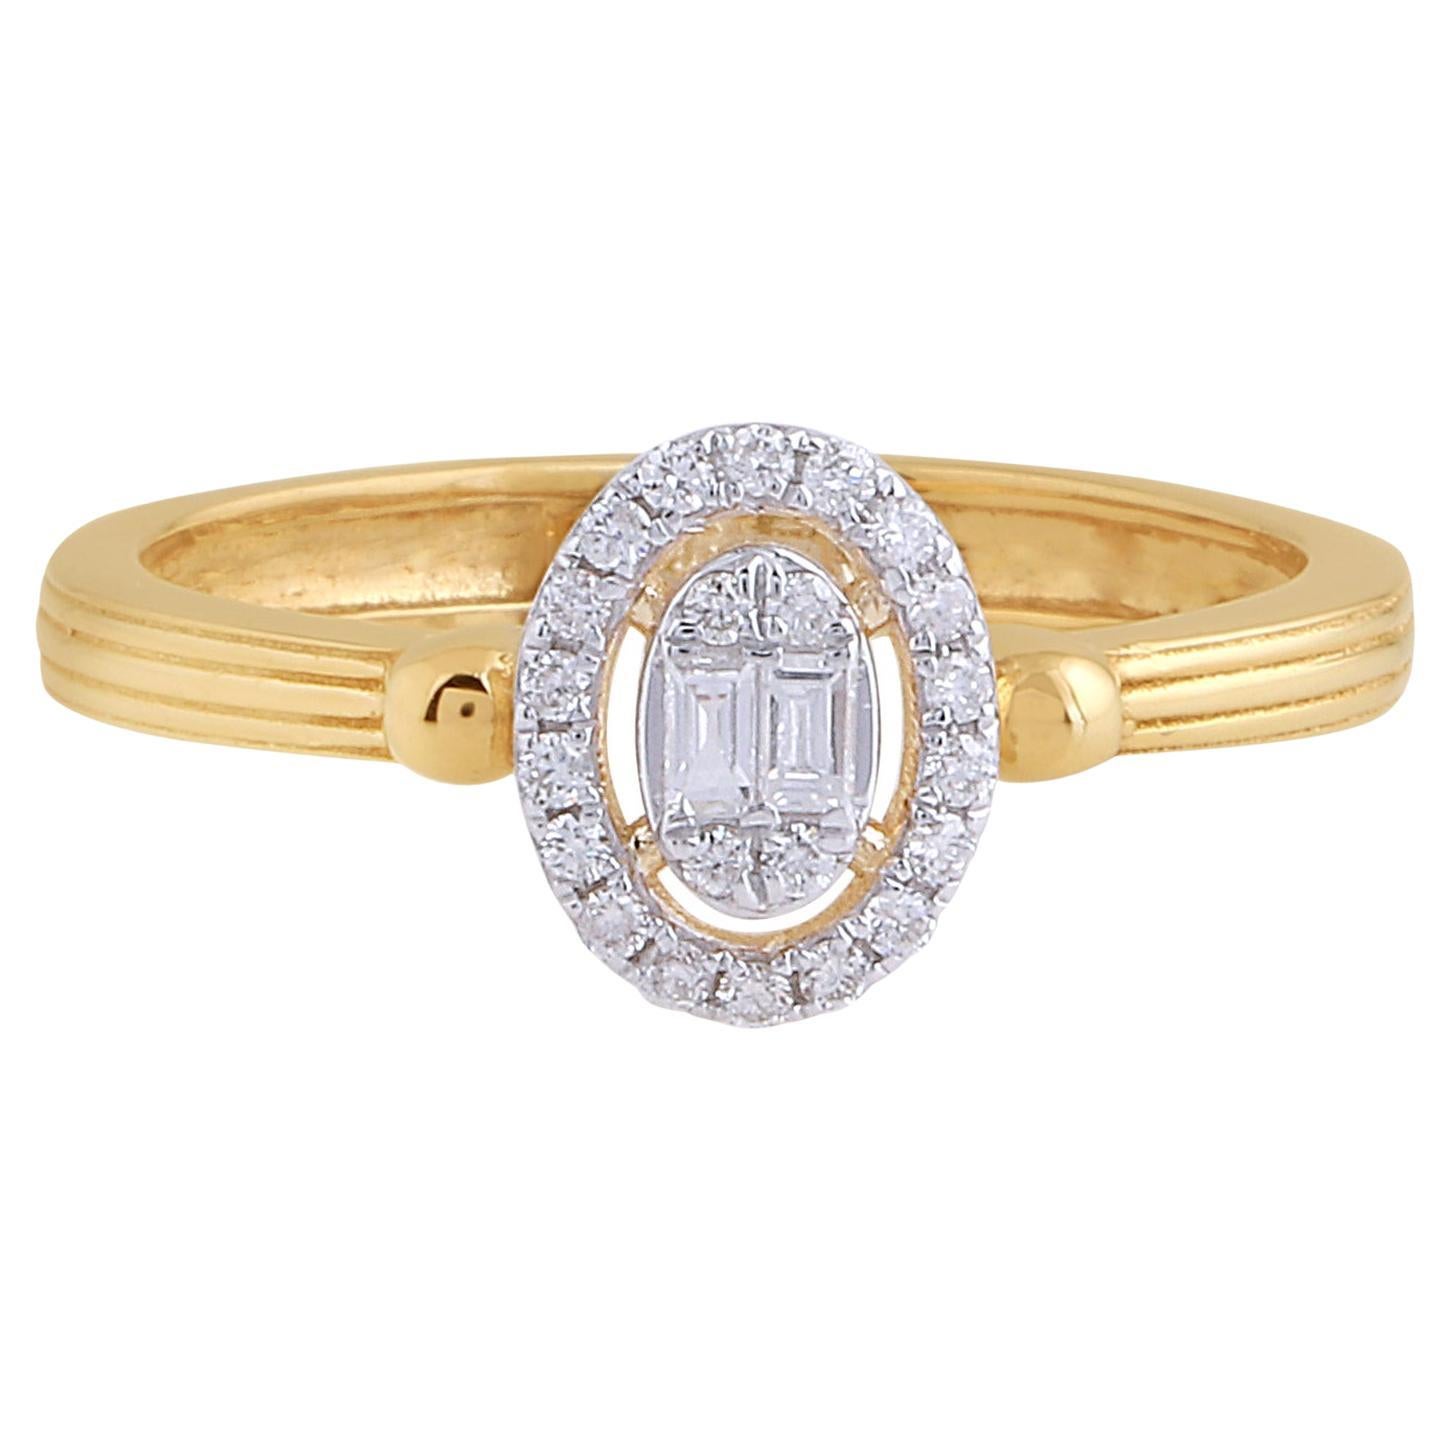 0.16 Carat Baguette Diamond Ring Solid 18 Karat Yellow Gold Handmade Jewelry For Sale